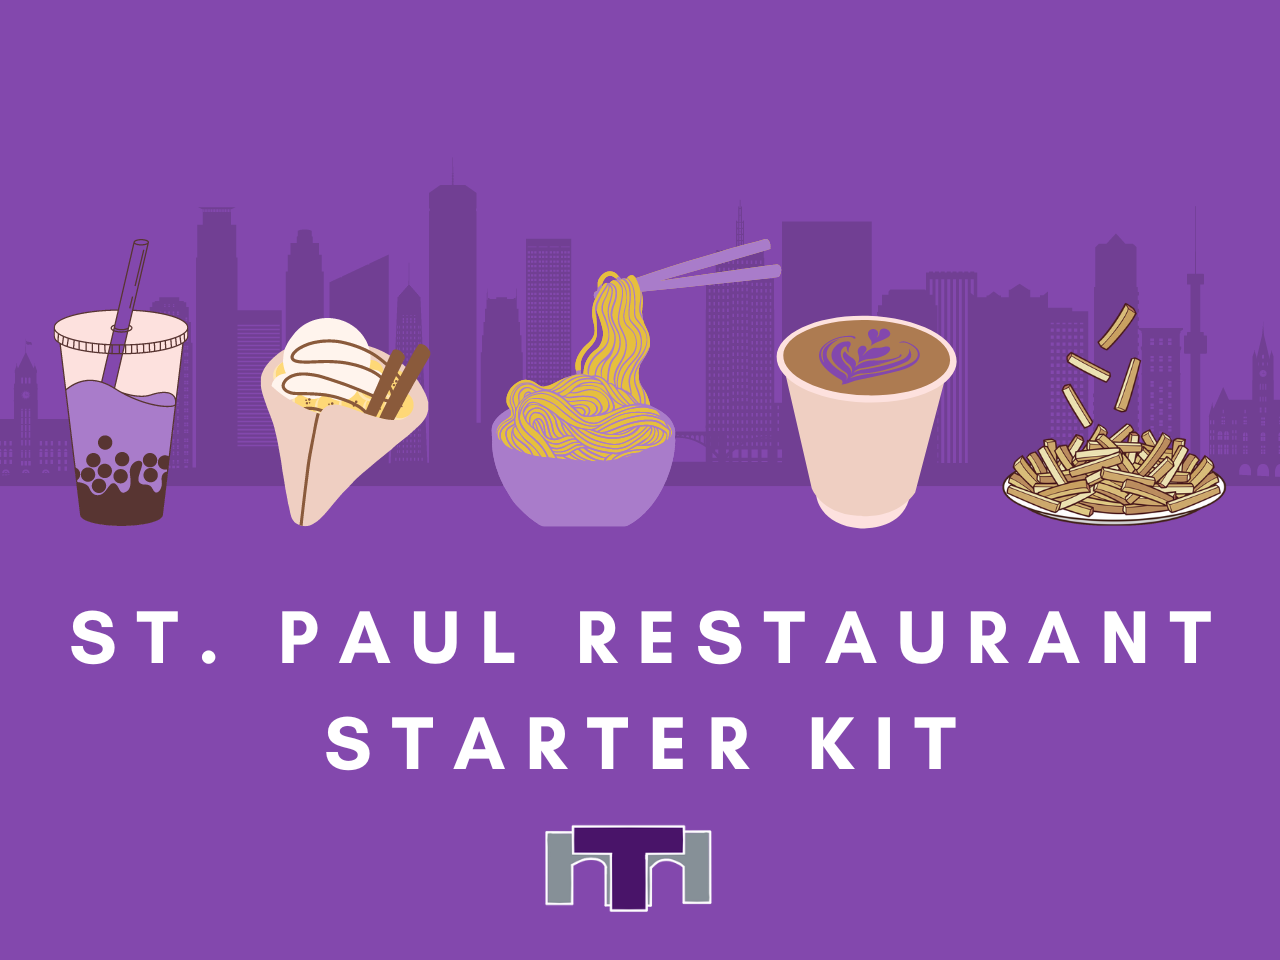 OPINION: My St. Paul restaurant starter kit – TommieMedia